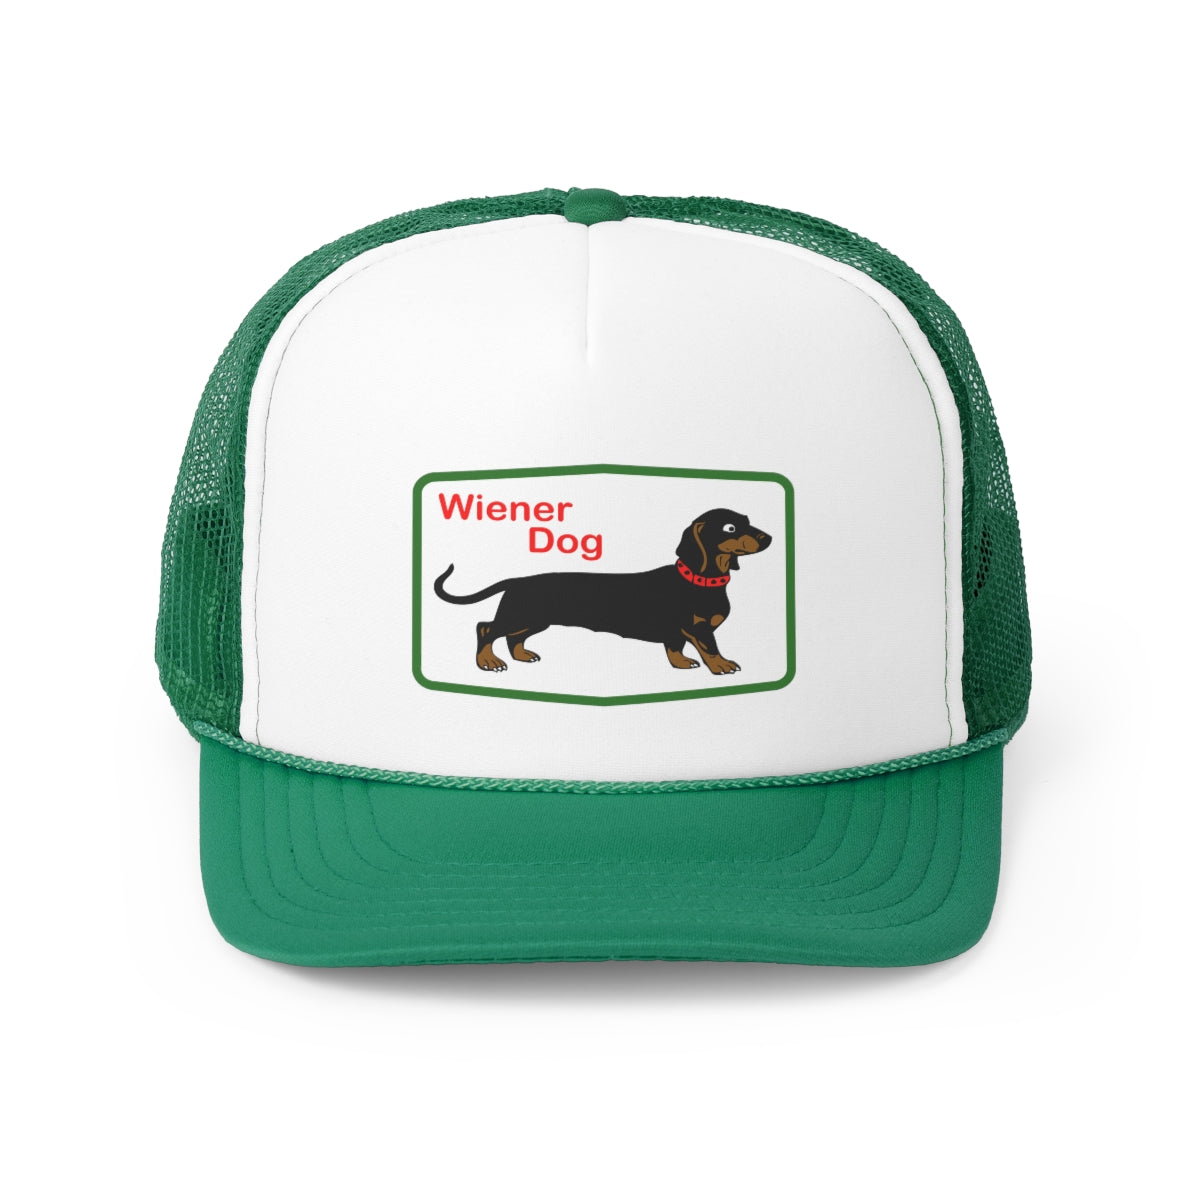 Wiener Dog Trucker Hat